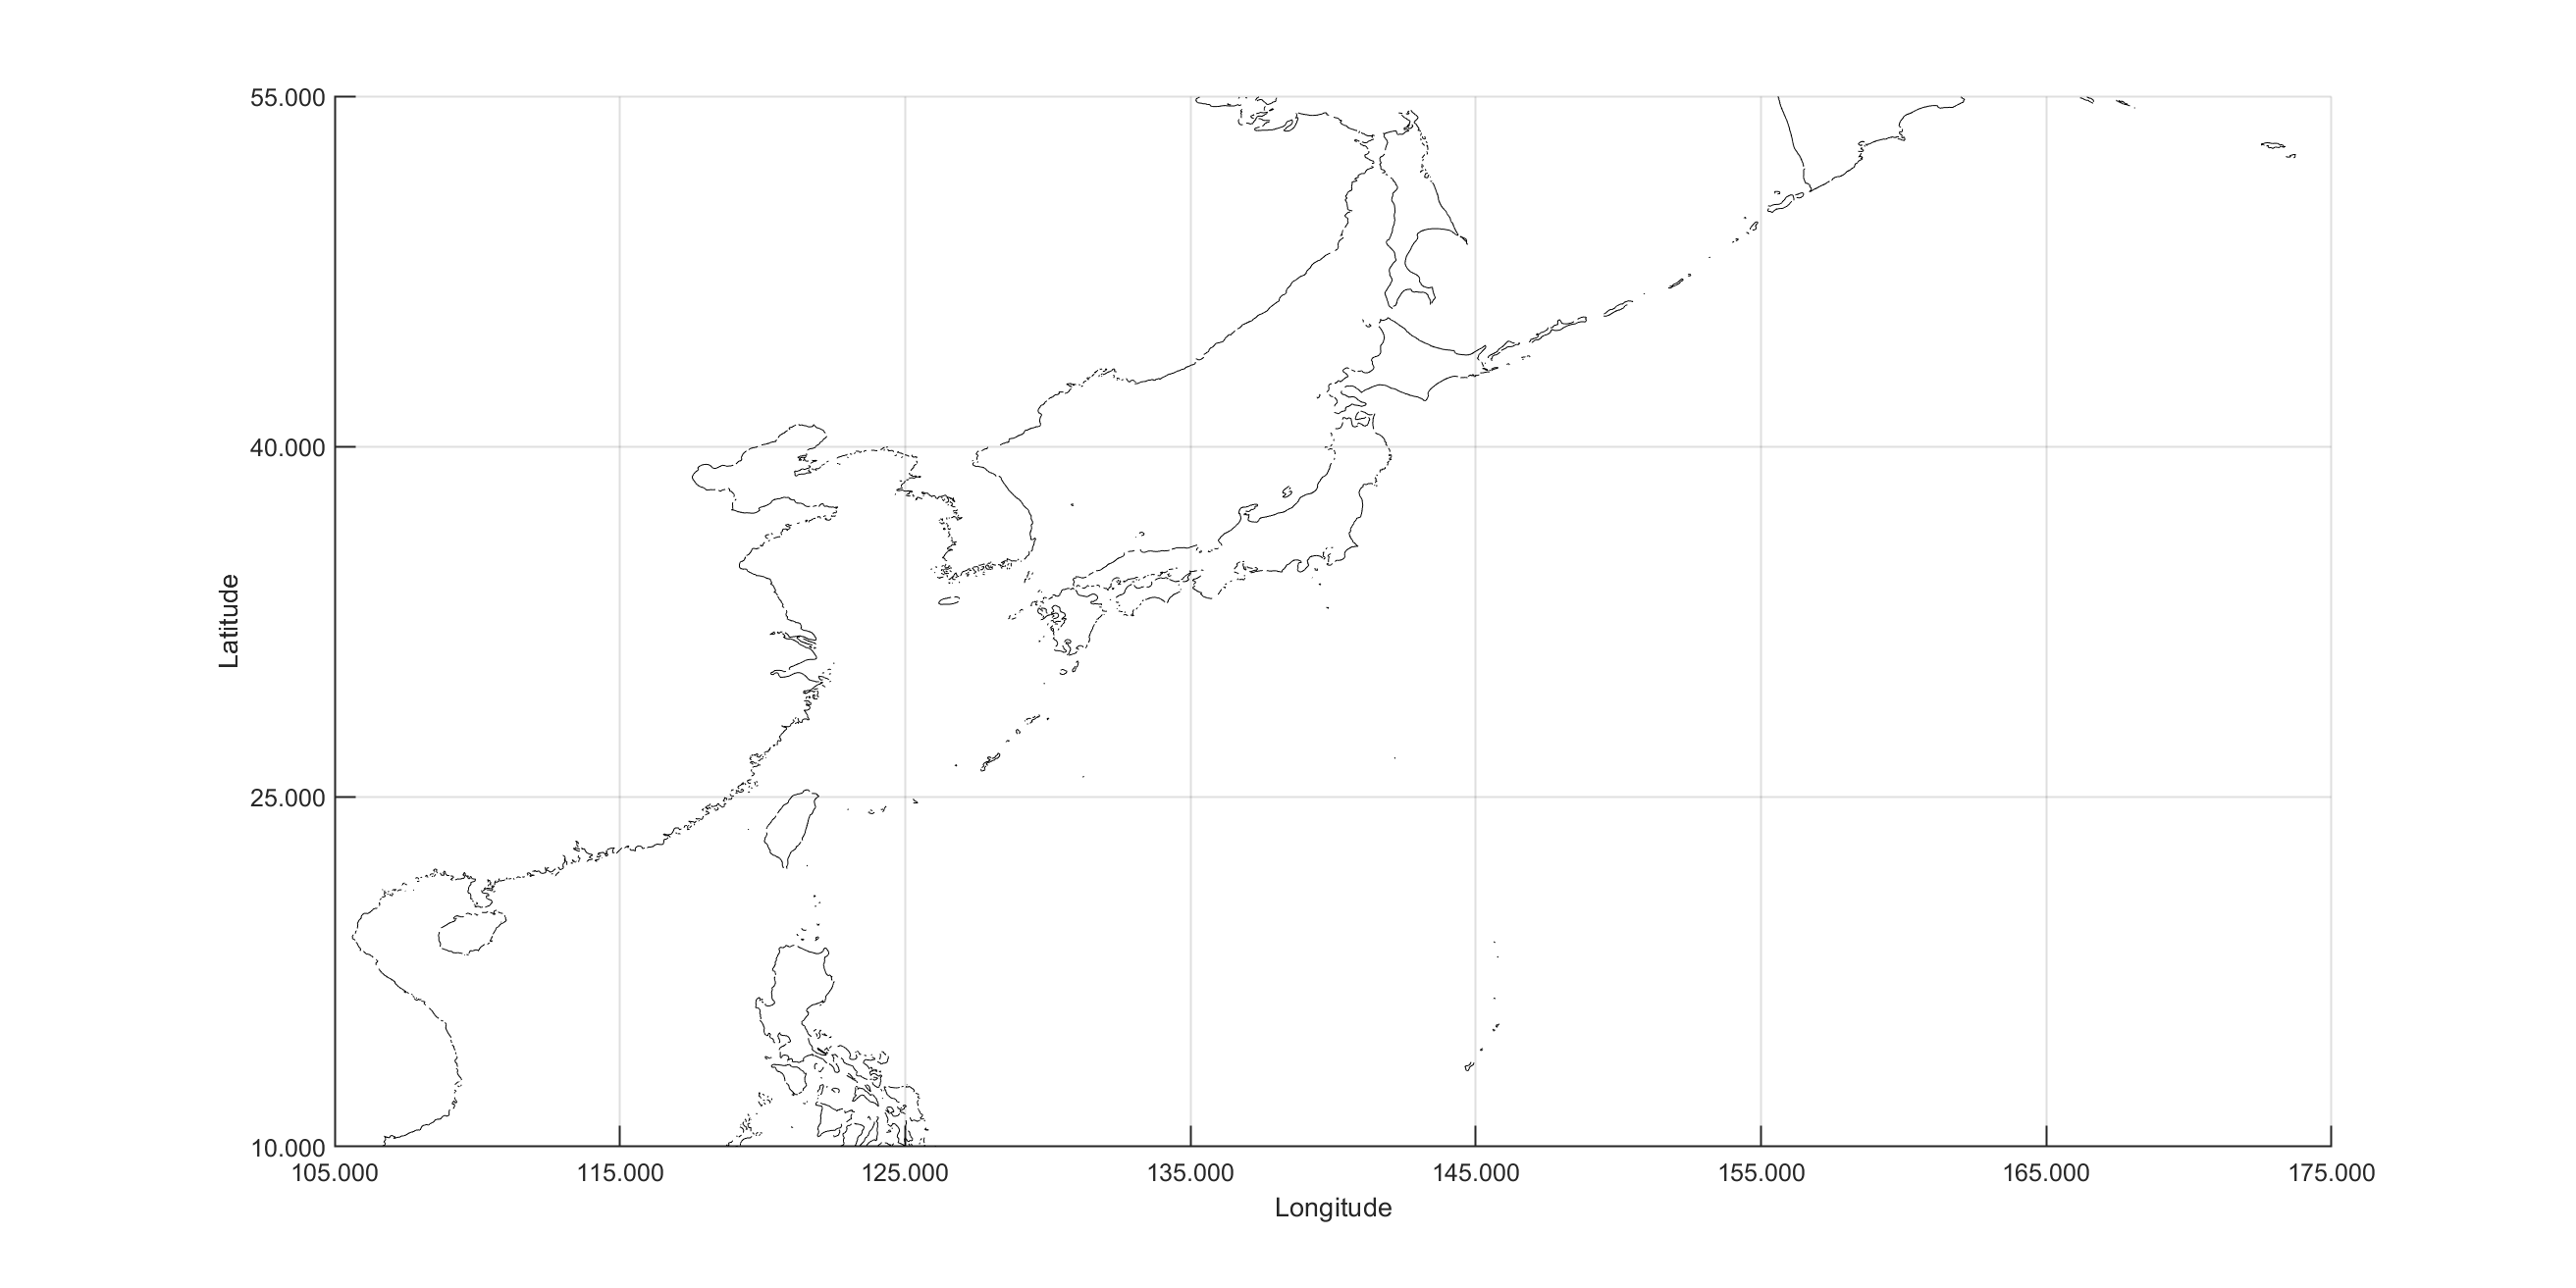 CYCLE_262 - Japan Ascending passes